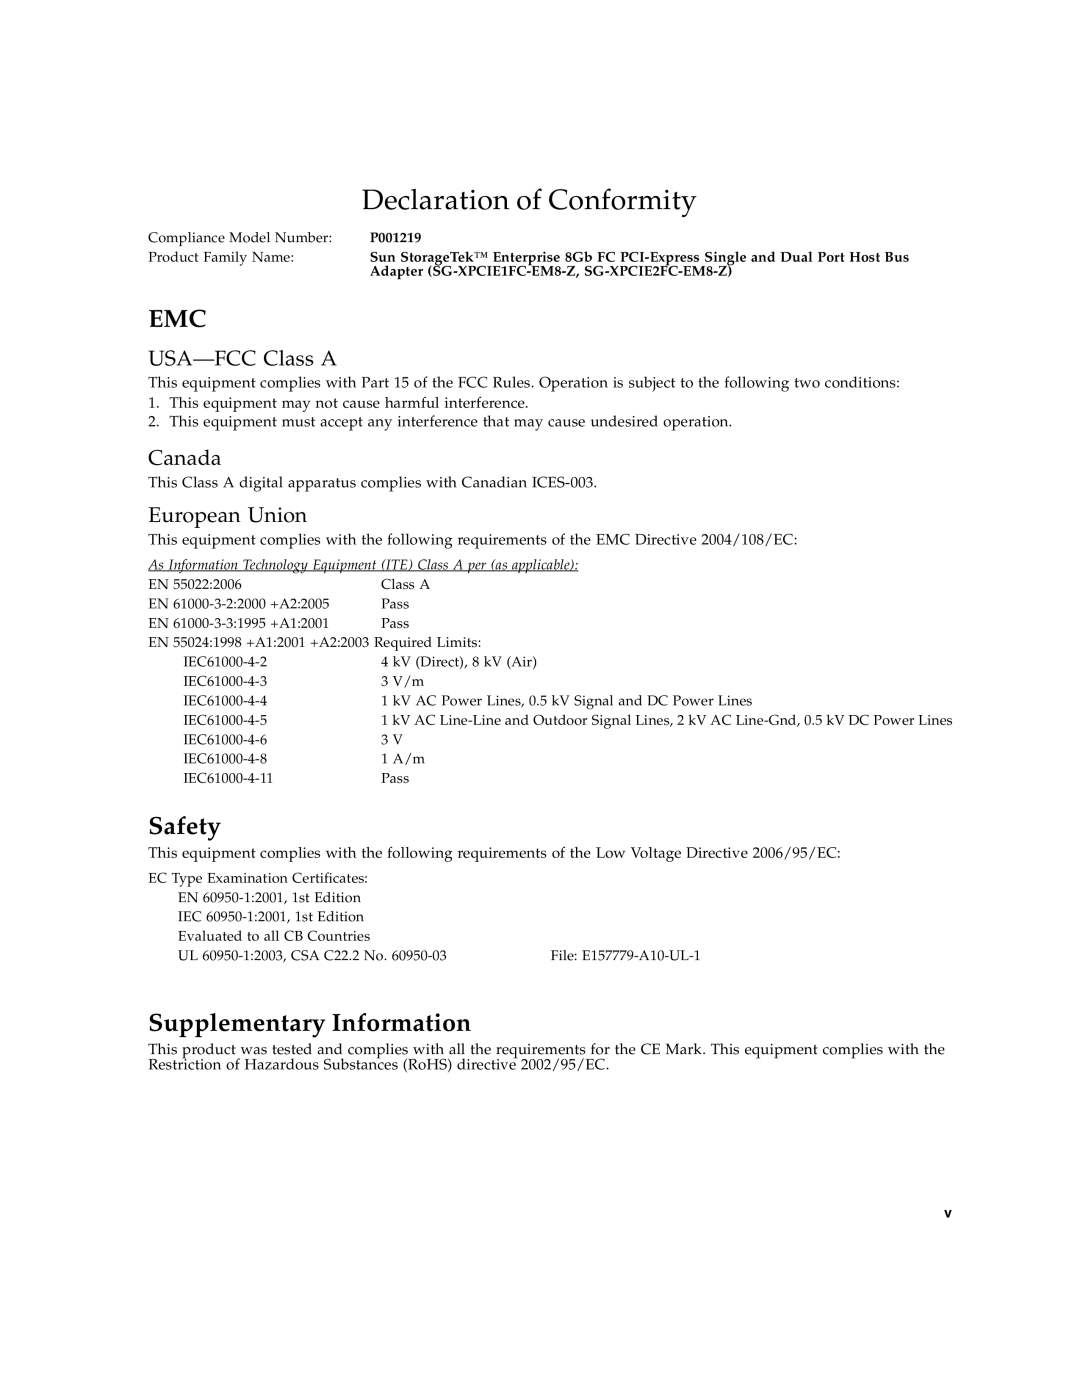 Sun Microsystems SG-XPCIE1FC-EM8-Z Declaration of Conformity, Safety, Supplementary Information, USA-FCC Class A, Canada 